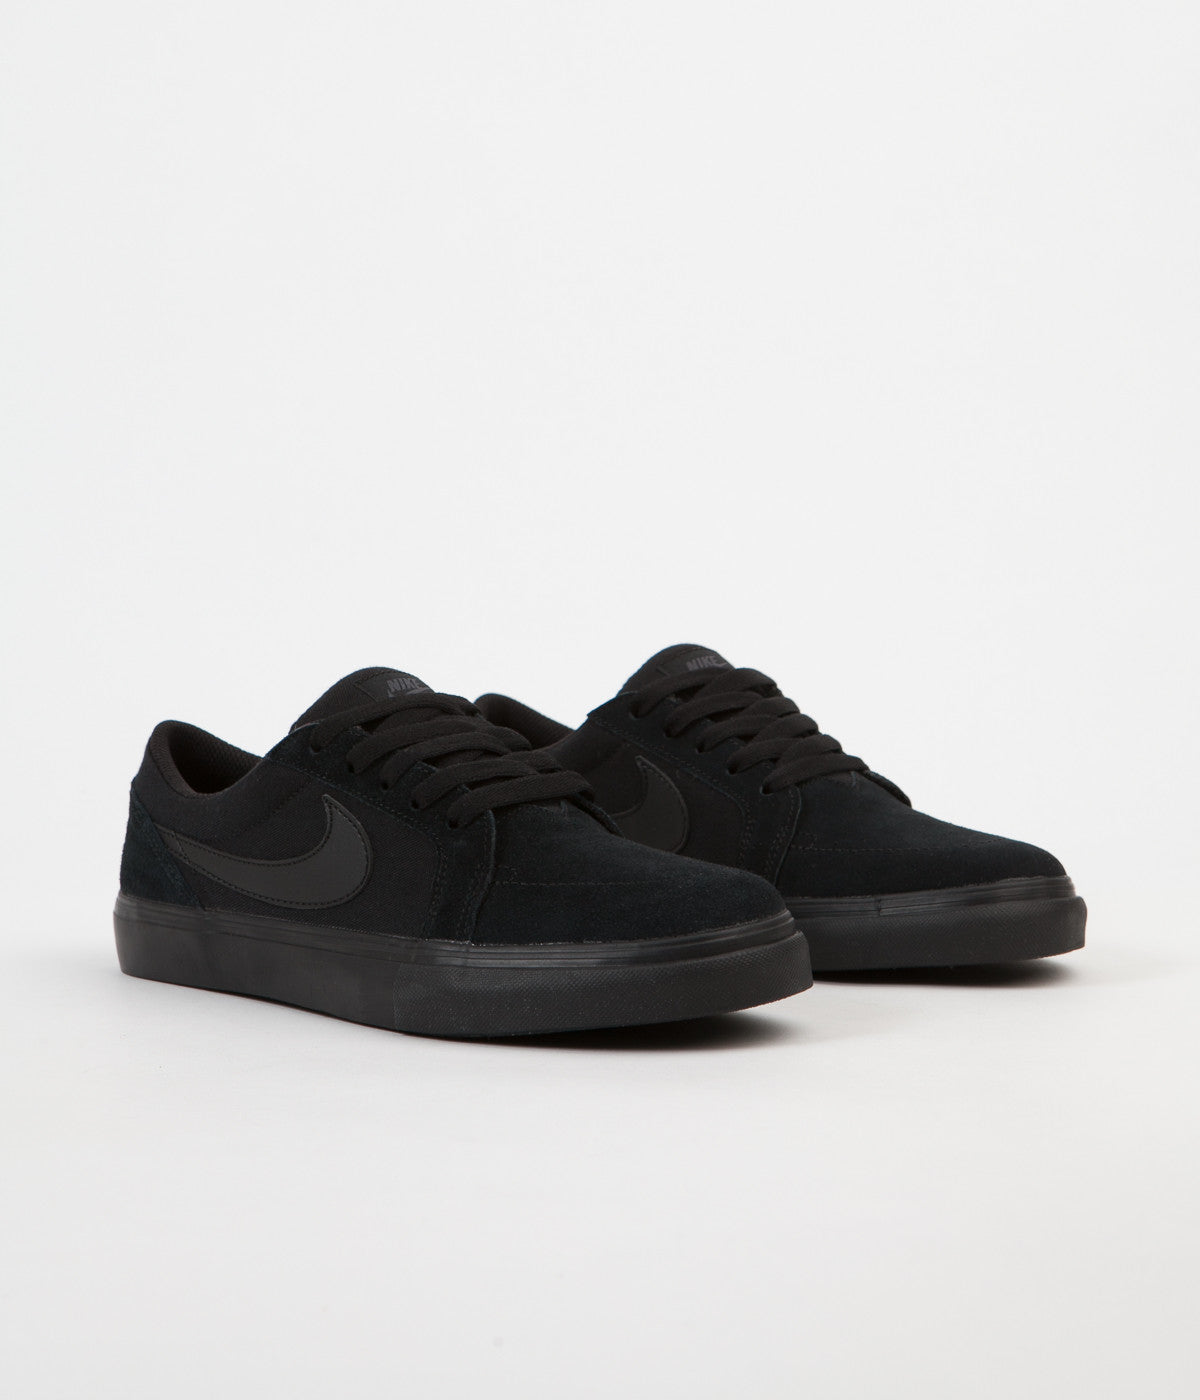 Nike SB Satire II Shoes - Black / Black - Anthracite |